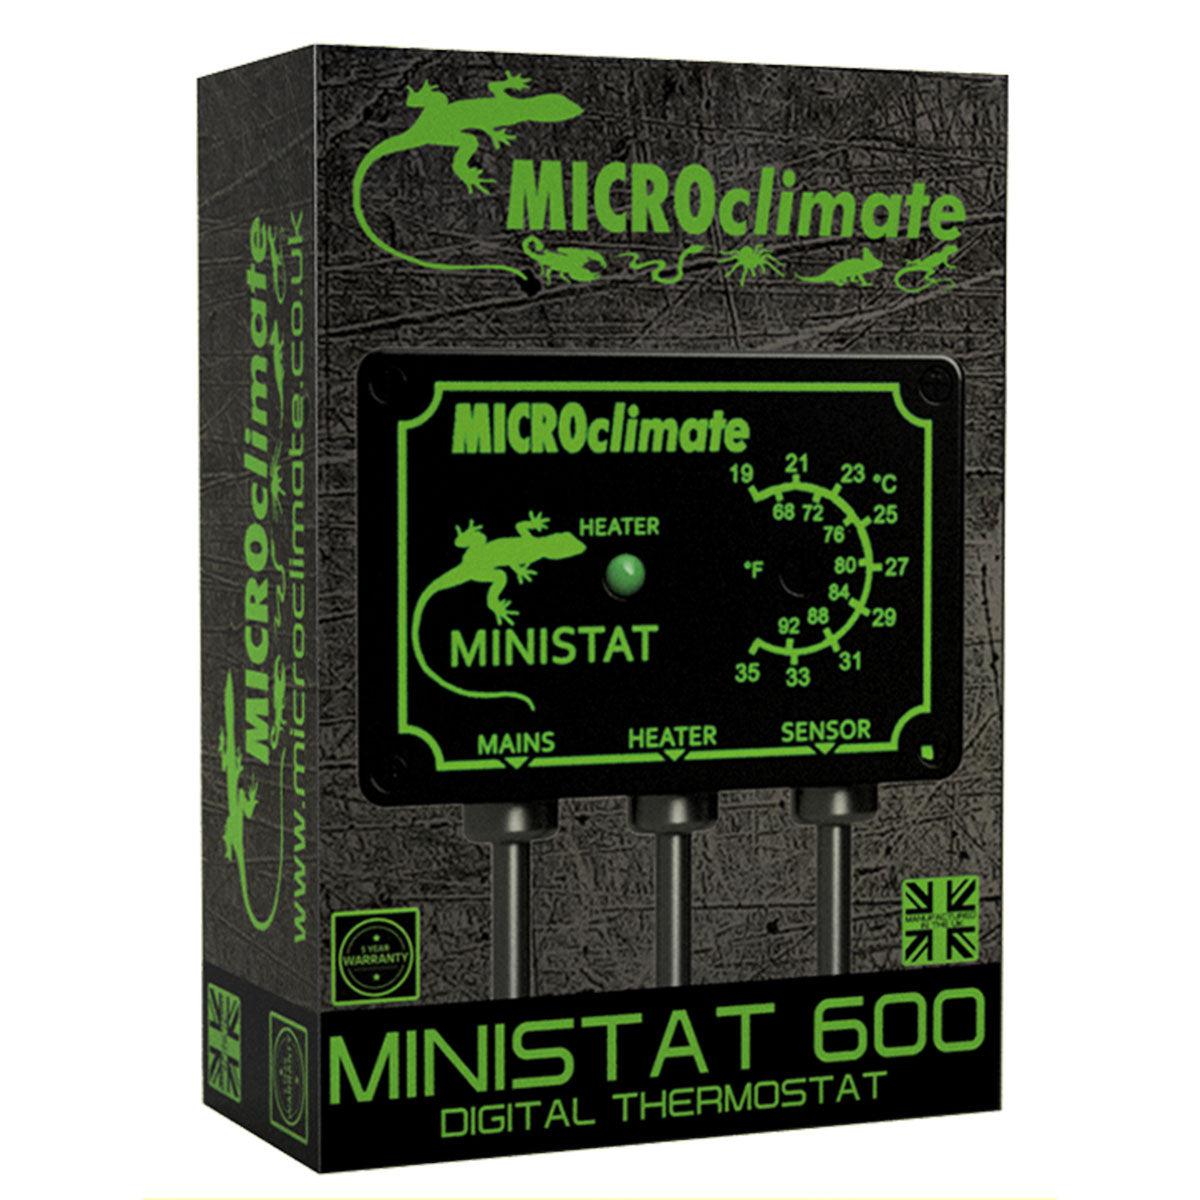 Microclimate Ministat 600 Thermostat